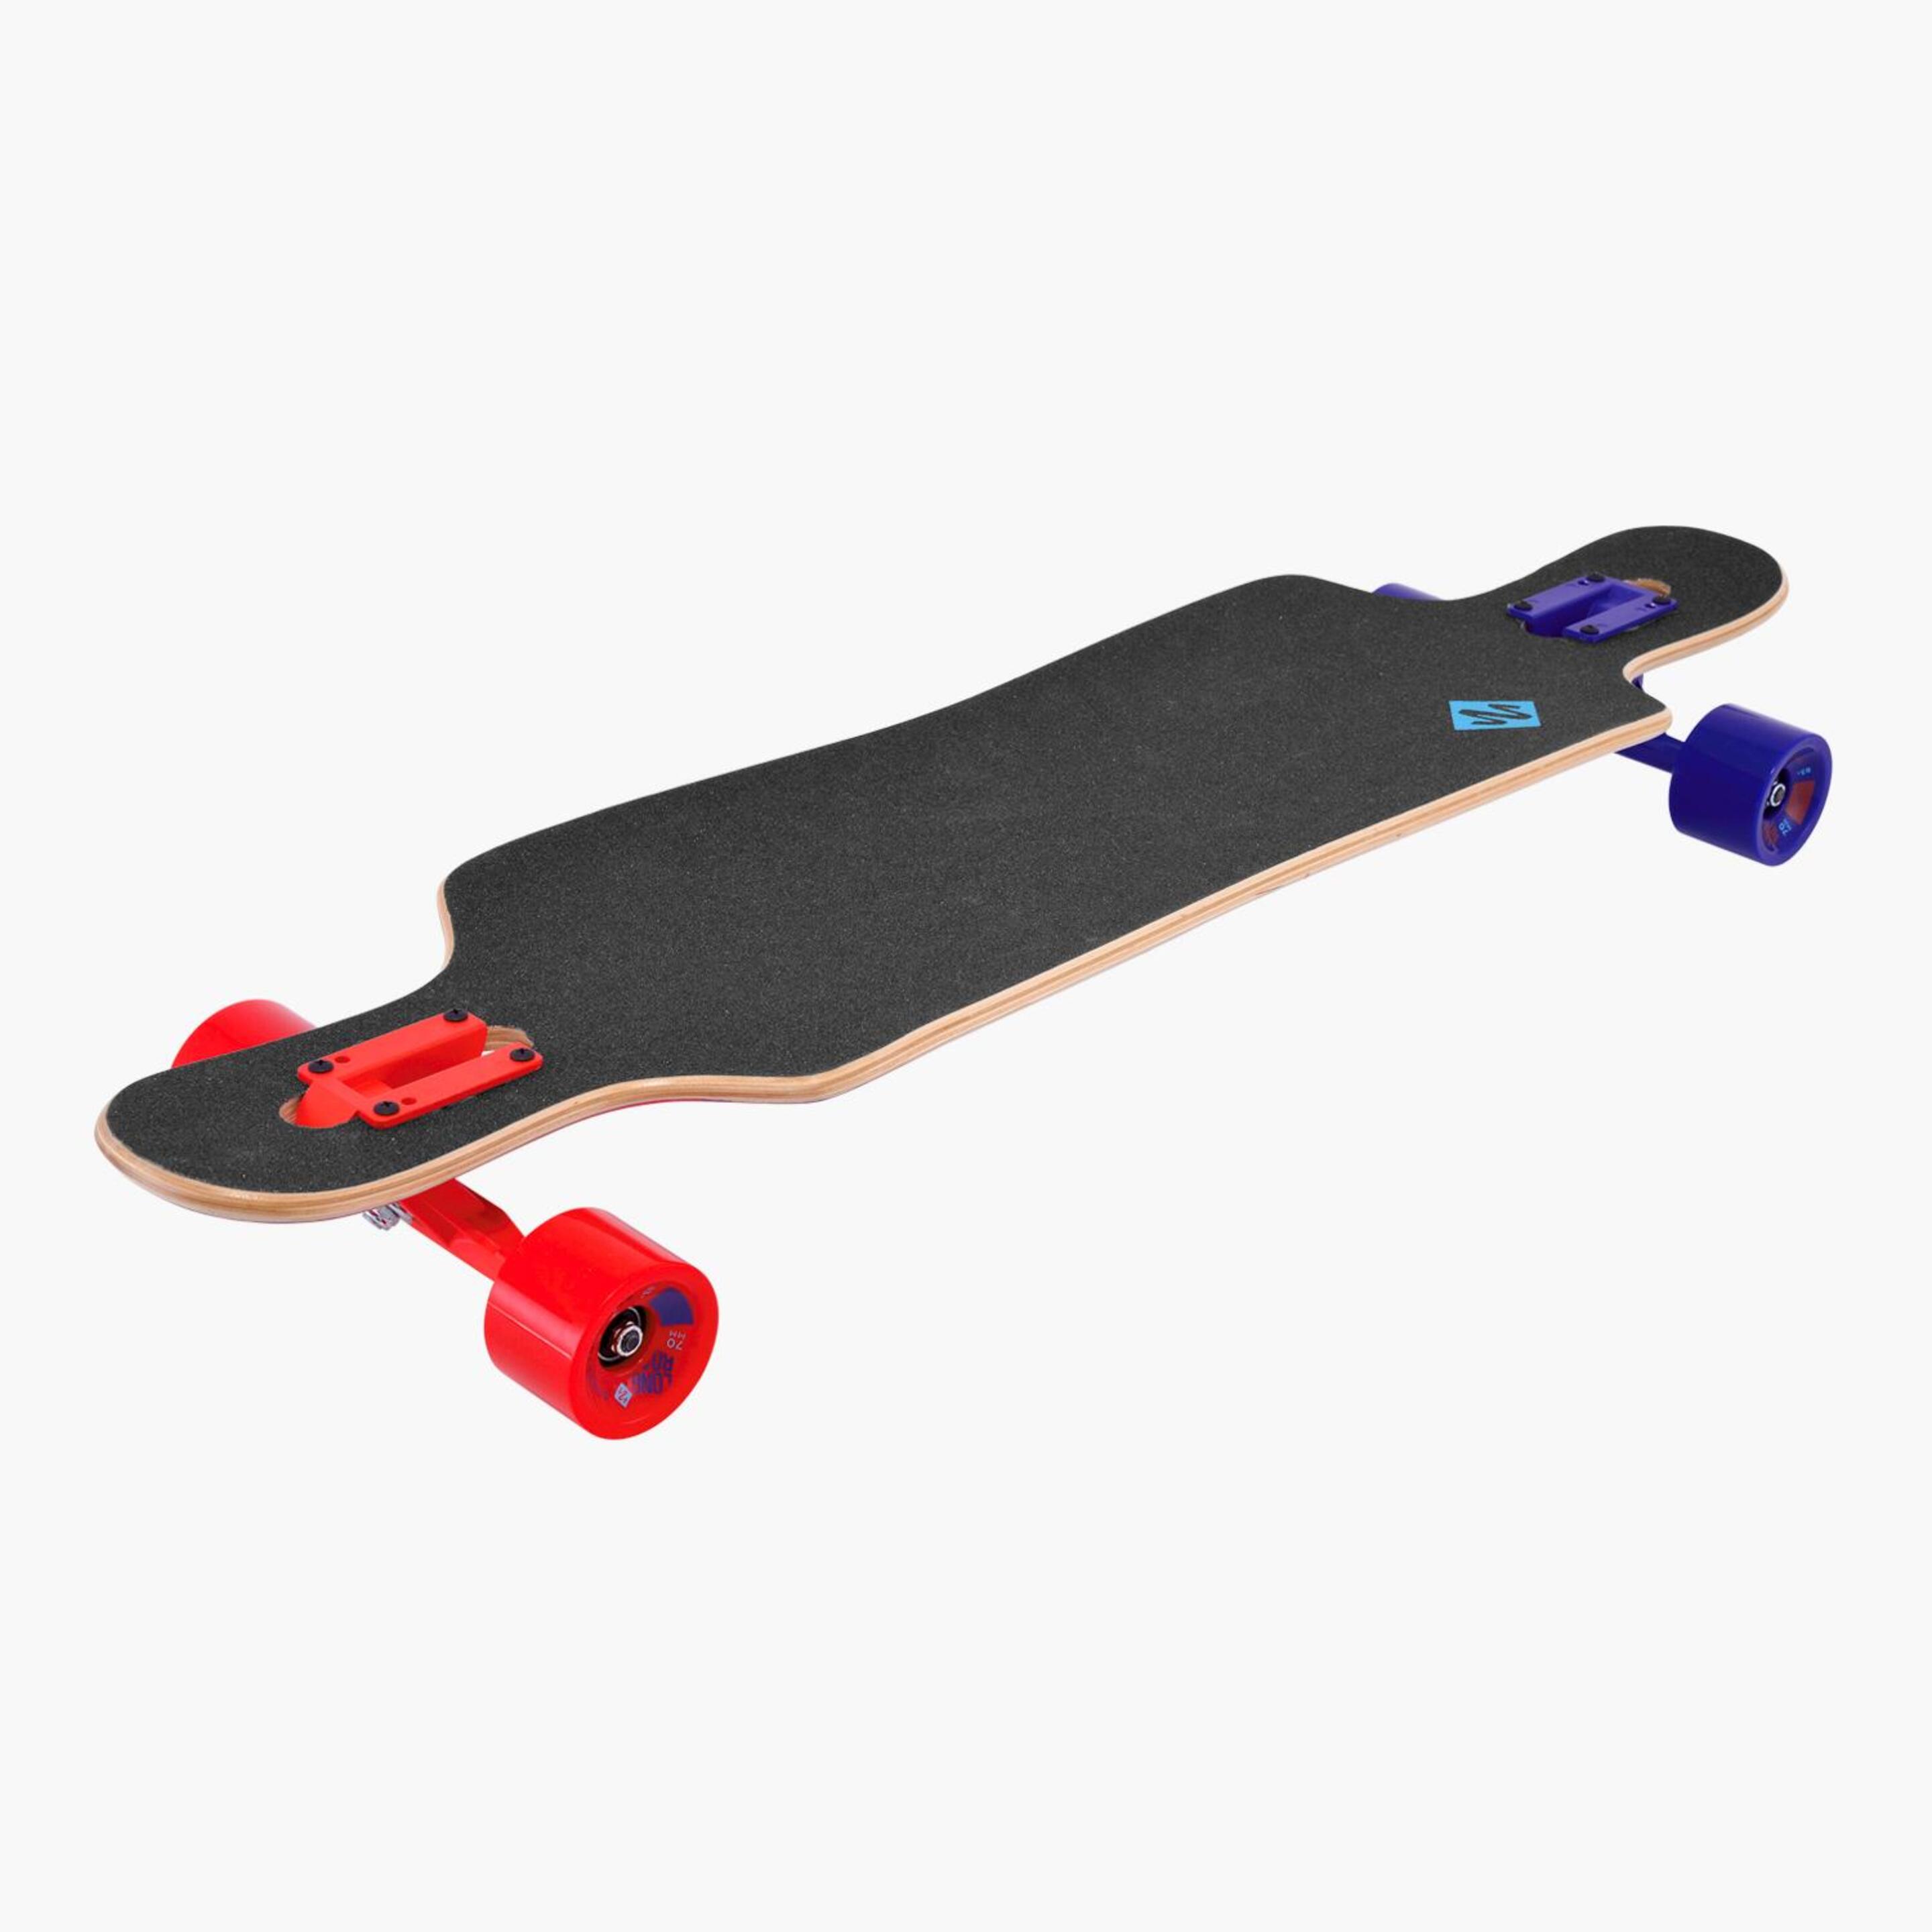 Street Surfing Higher Faster 39" - Azul - Skateboard  MKP